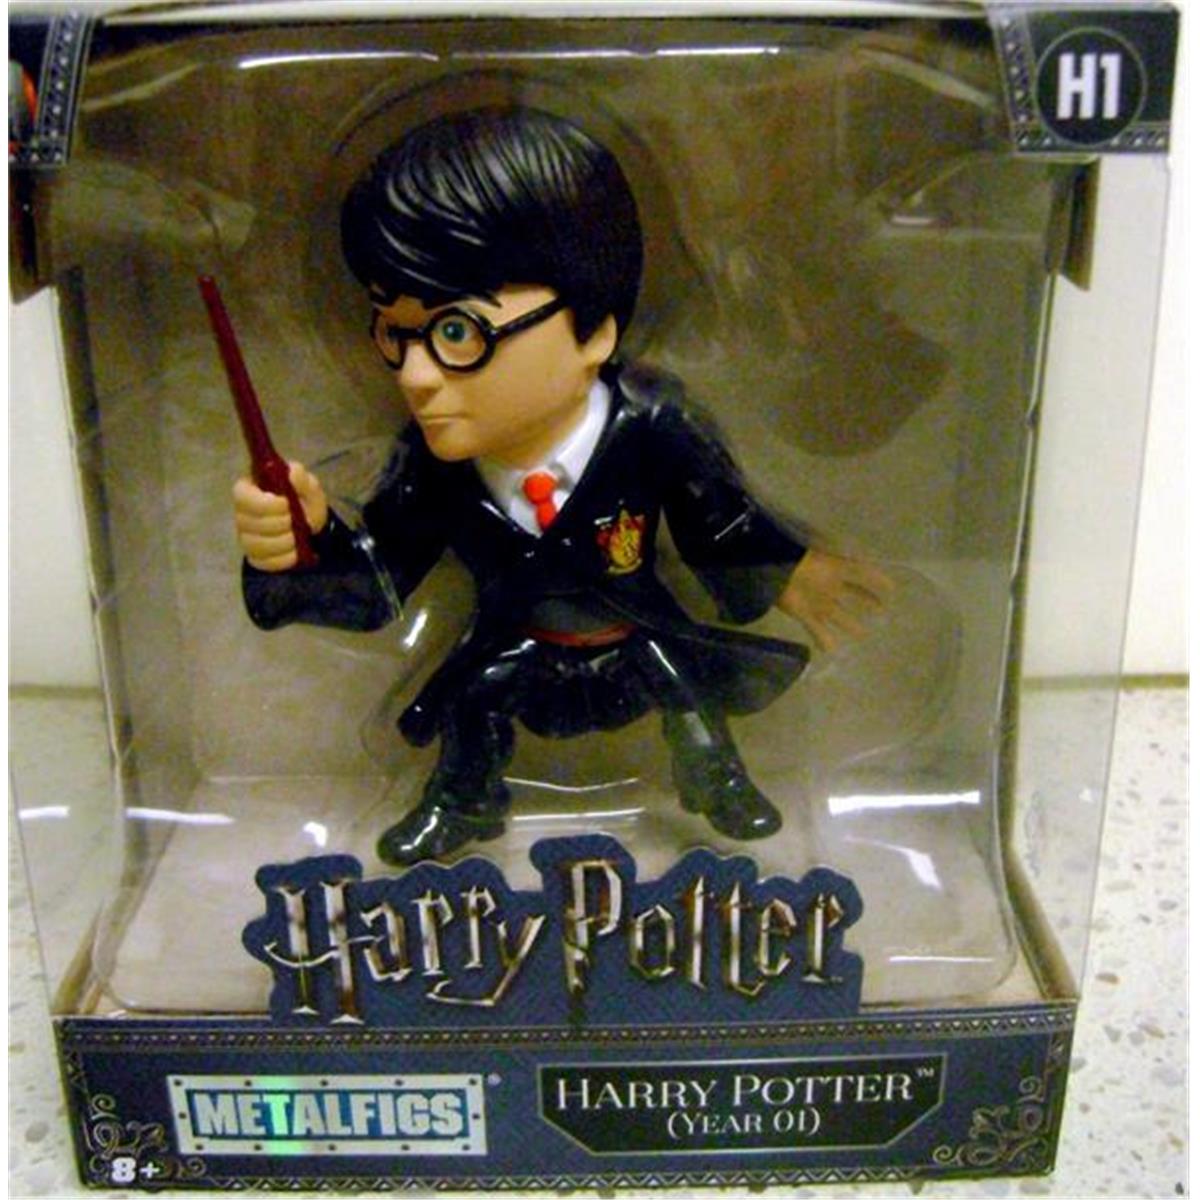 Picture of Autograph Warehouse 639313 5 x 6 in. Harry Potter Toy - Metalfigs Die Cast Netal Figure H1 NIB Box - Daniel Radcliffe